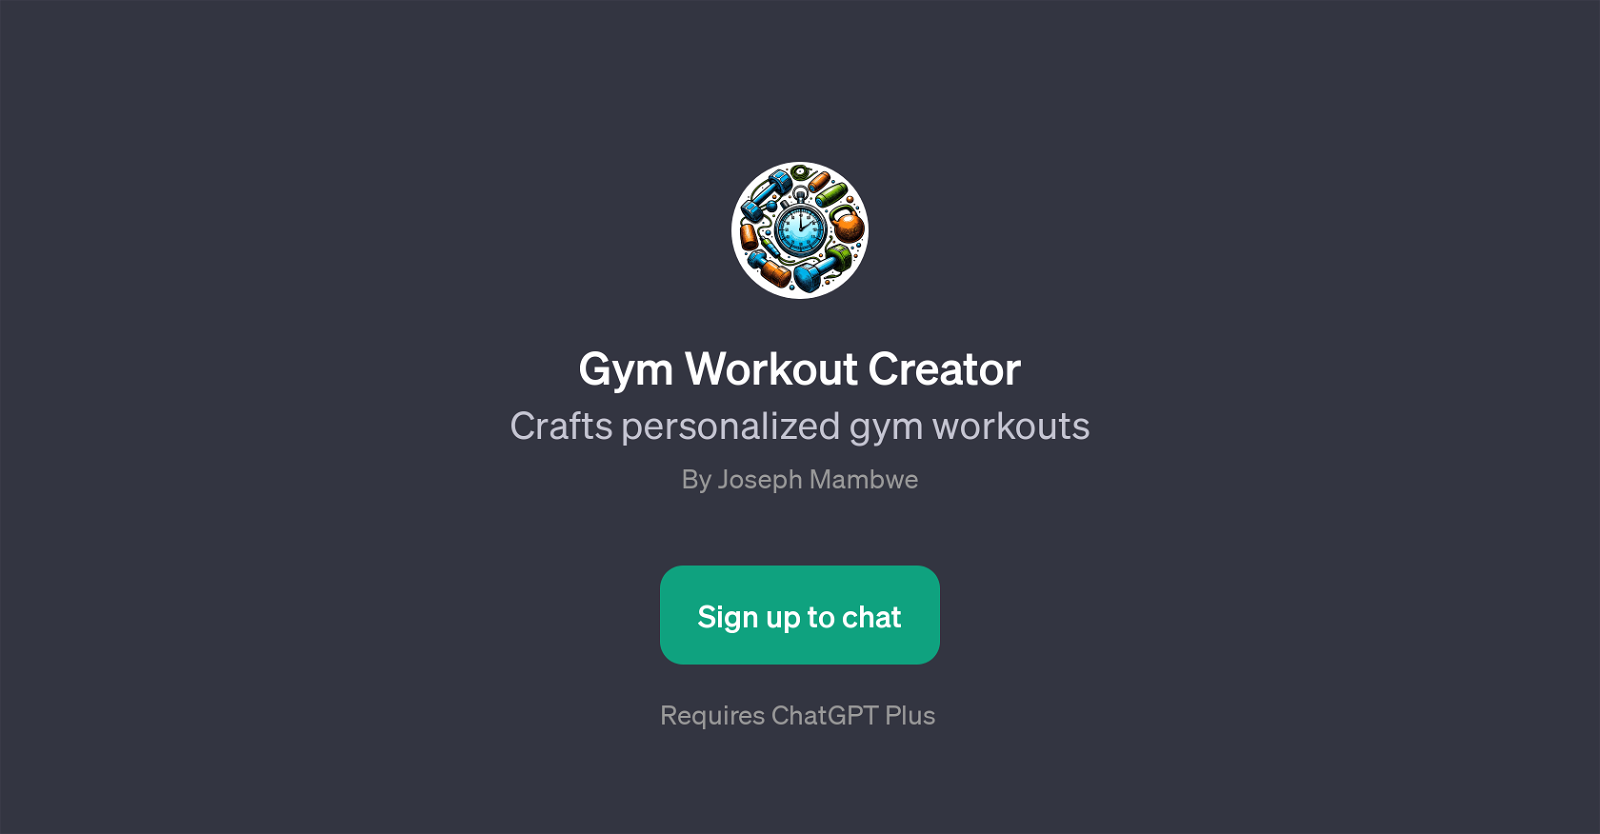 Gym Workout Creator website